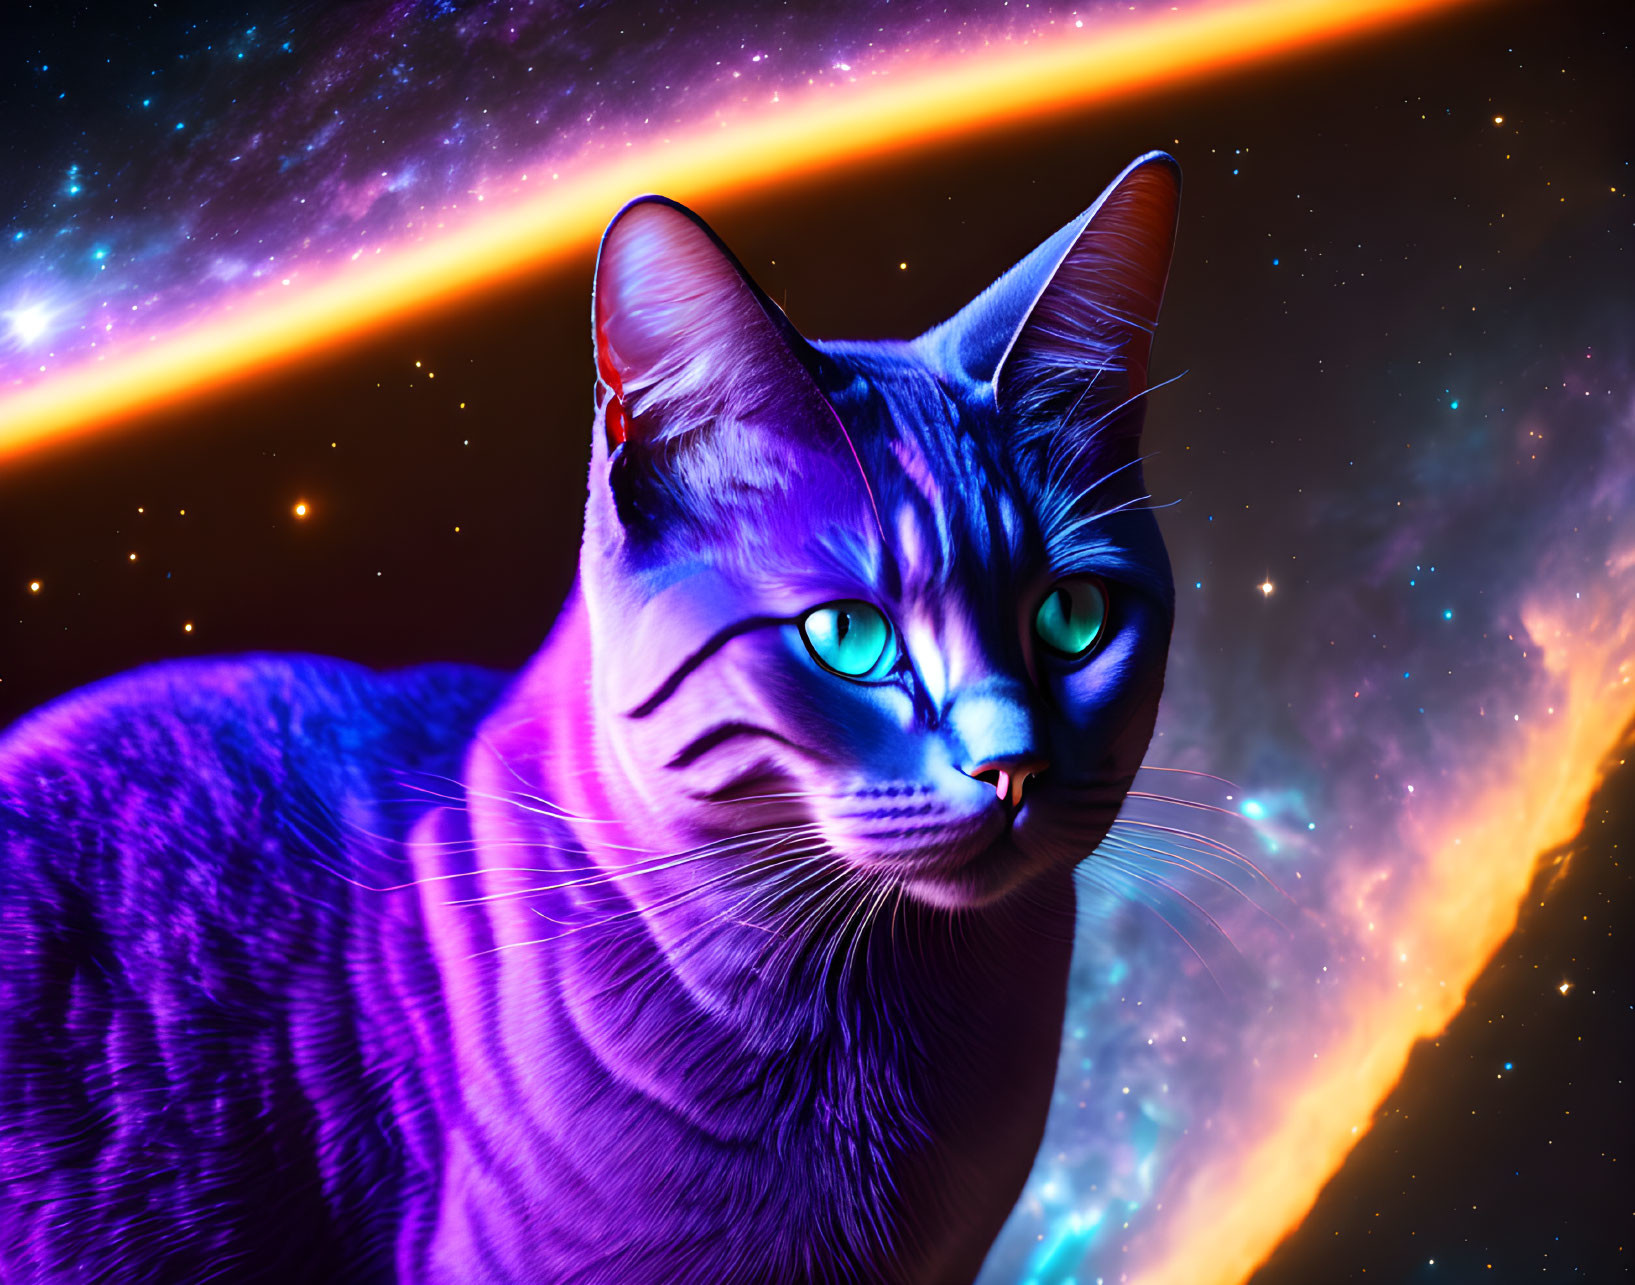 Colorful digital artwork: Blue cat with green eyes in cosmic scene